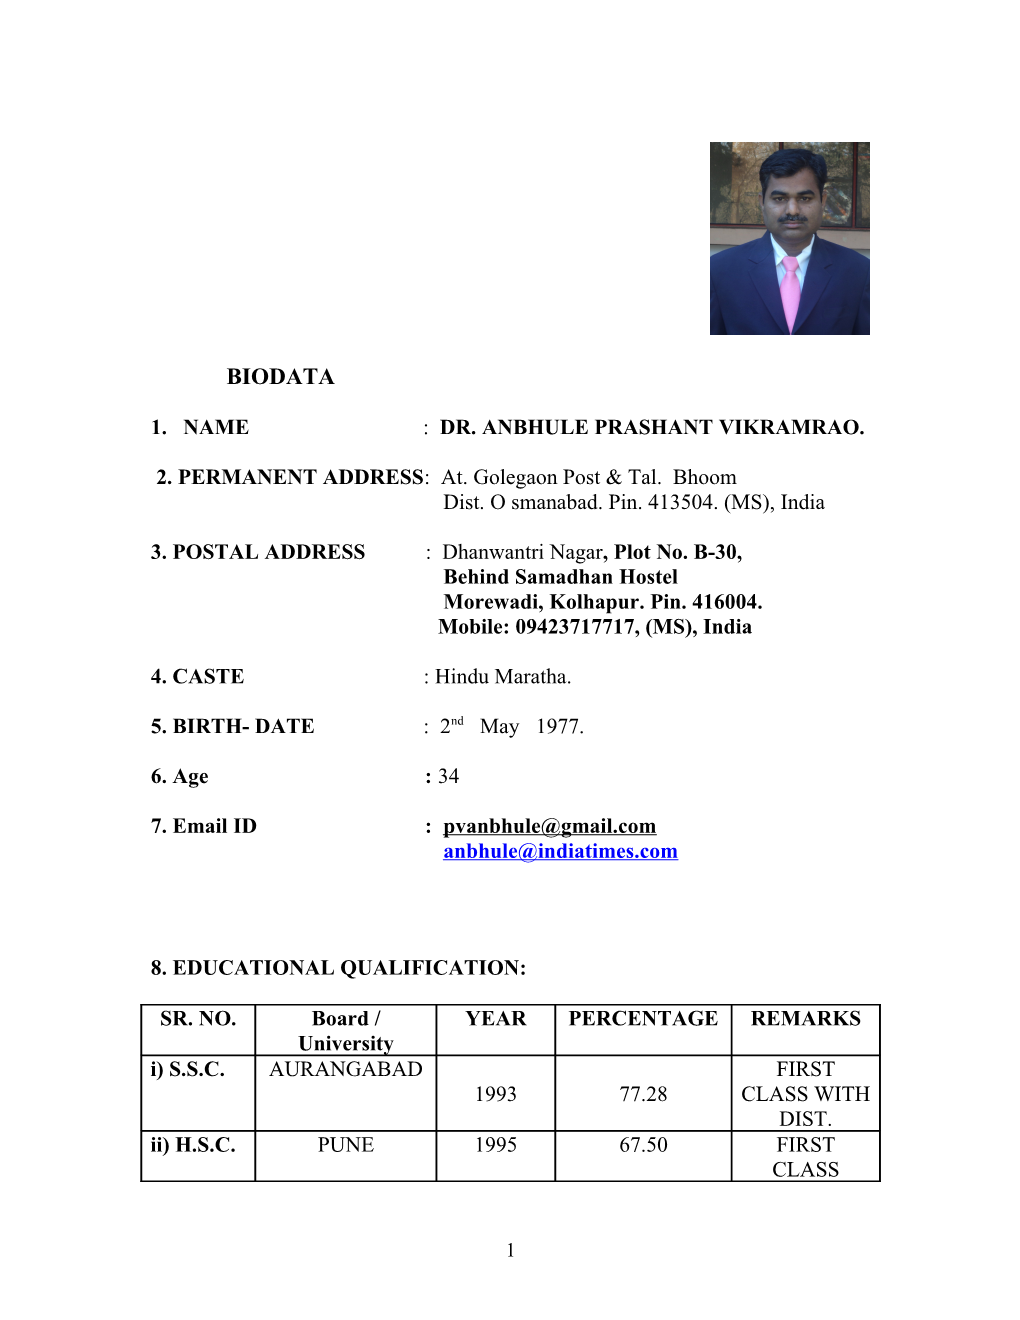 1. Name : Dr. Anbhule Prashant Vikramrao